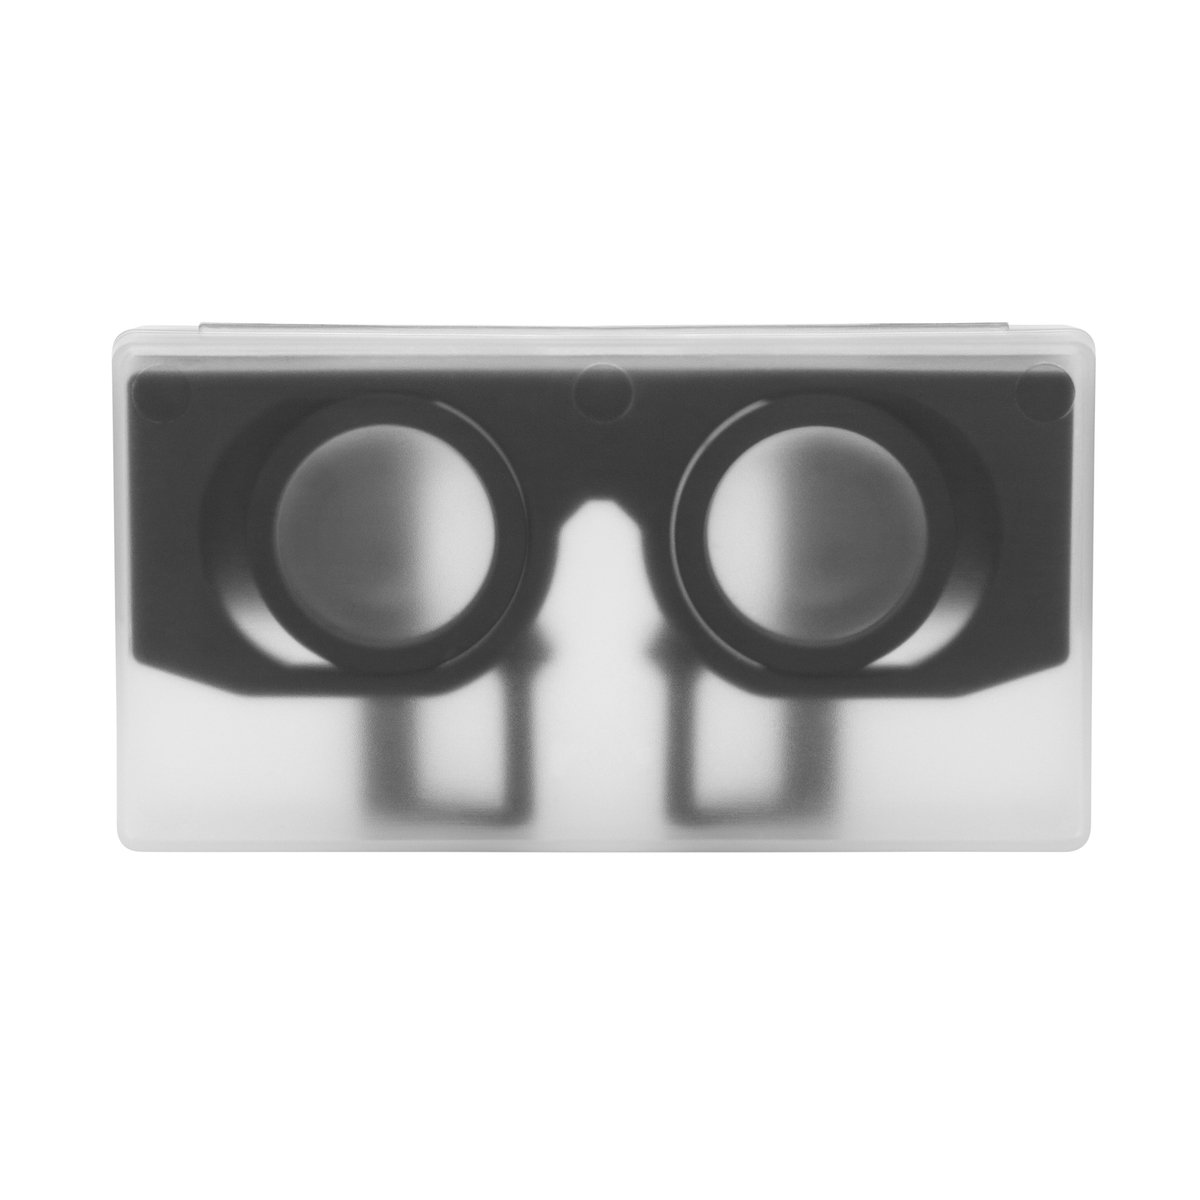 VR glasses REEVES-BILOXI